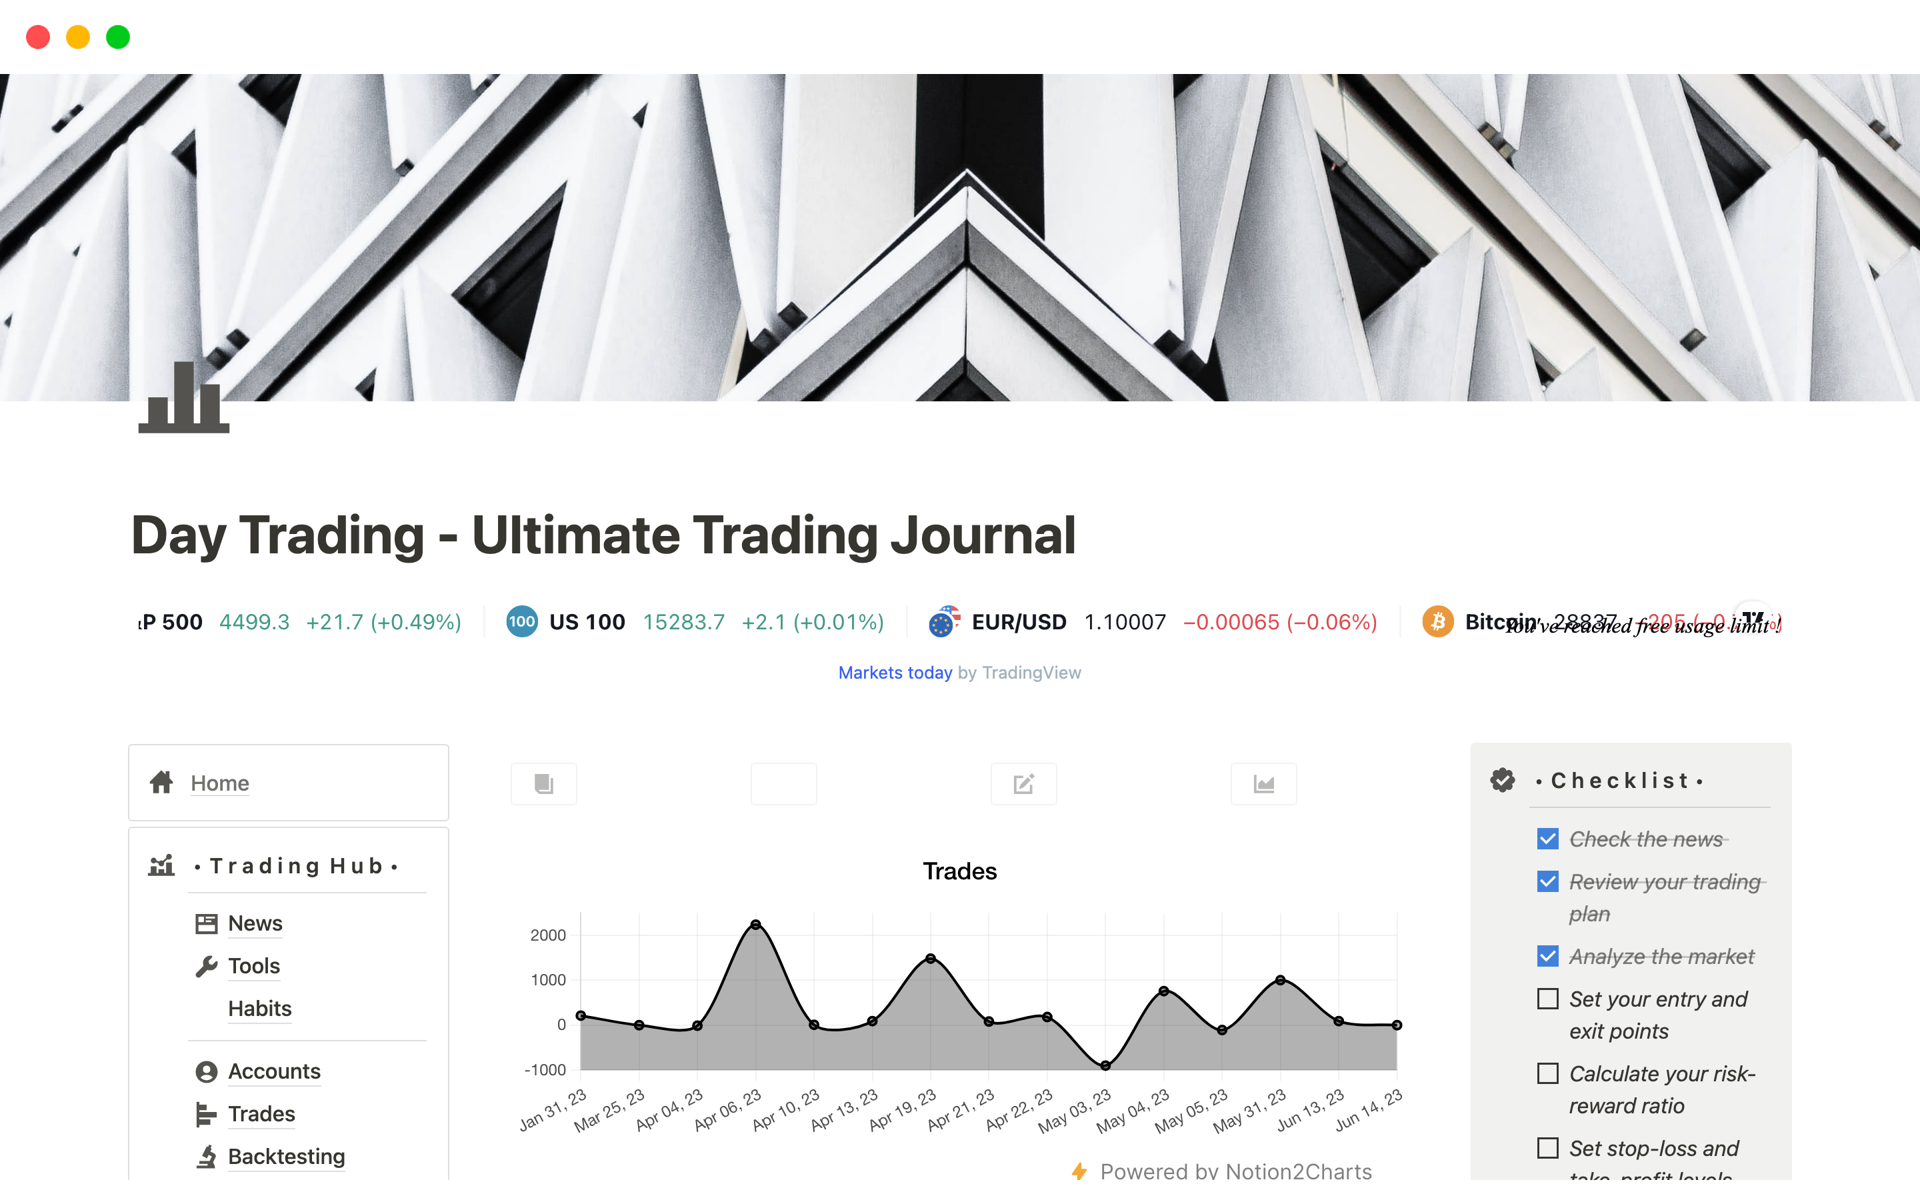 Aperçu du modèle de Day Trading - Ultimate Trading Journal